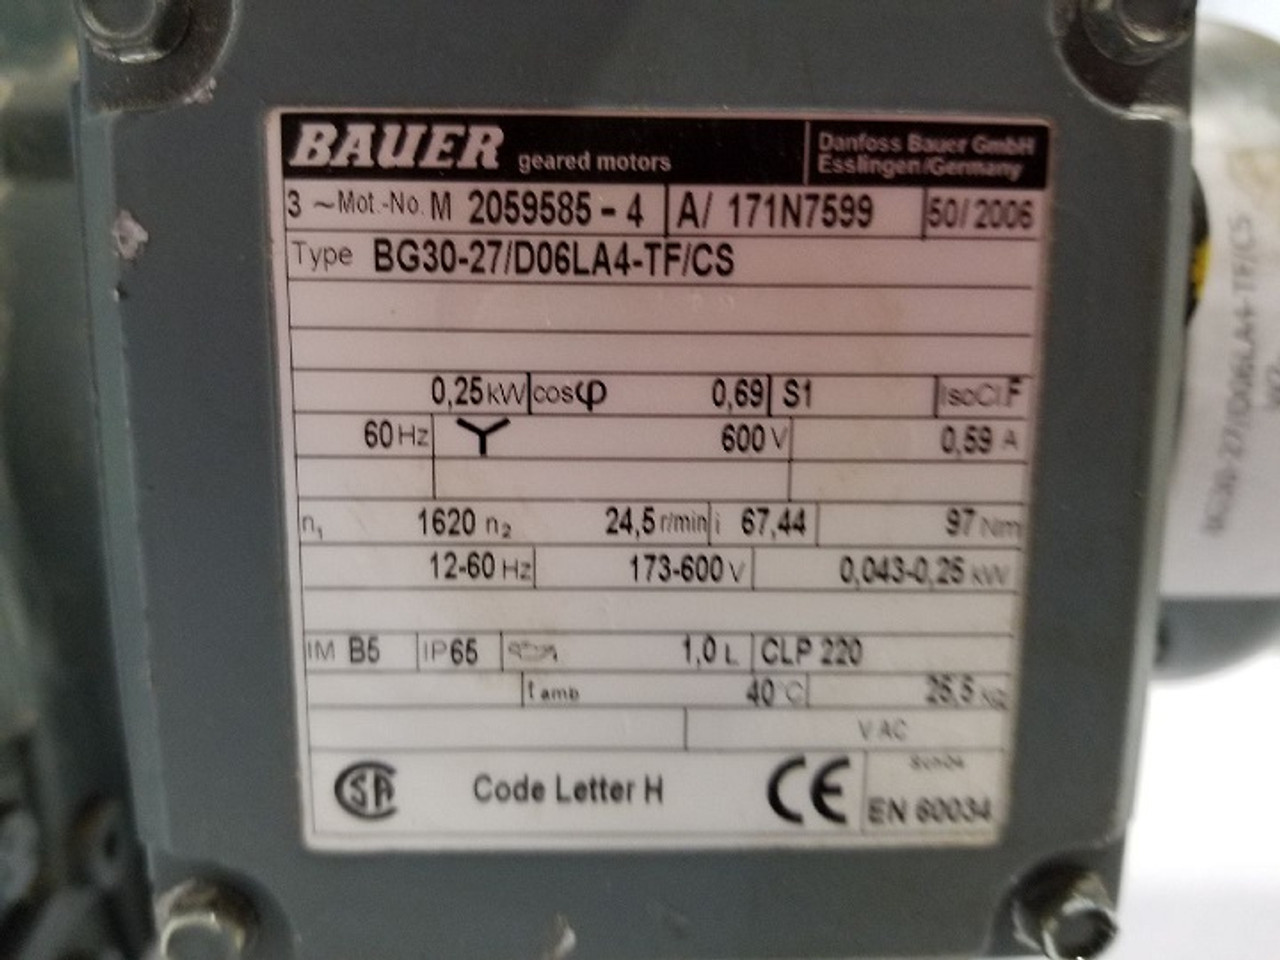 Bauer 0.043-0.25kW 24.5RPM 173-600V 3Ph 0.59A 12-60Hz 67.44:1 Ratio 97Nm USED